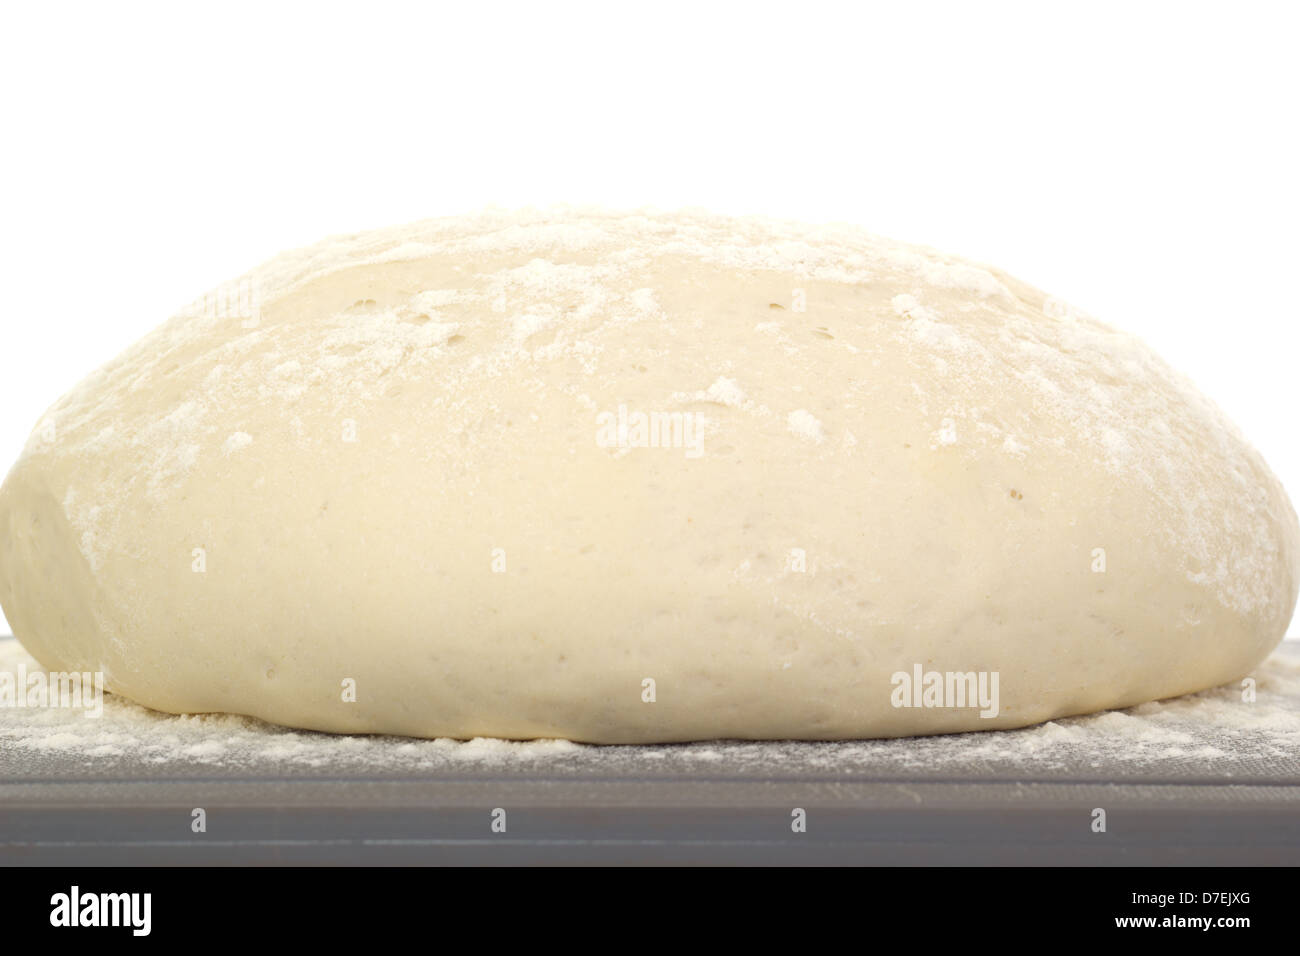 Rising bread dough set: image 2 of 4 Stock Photo